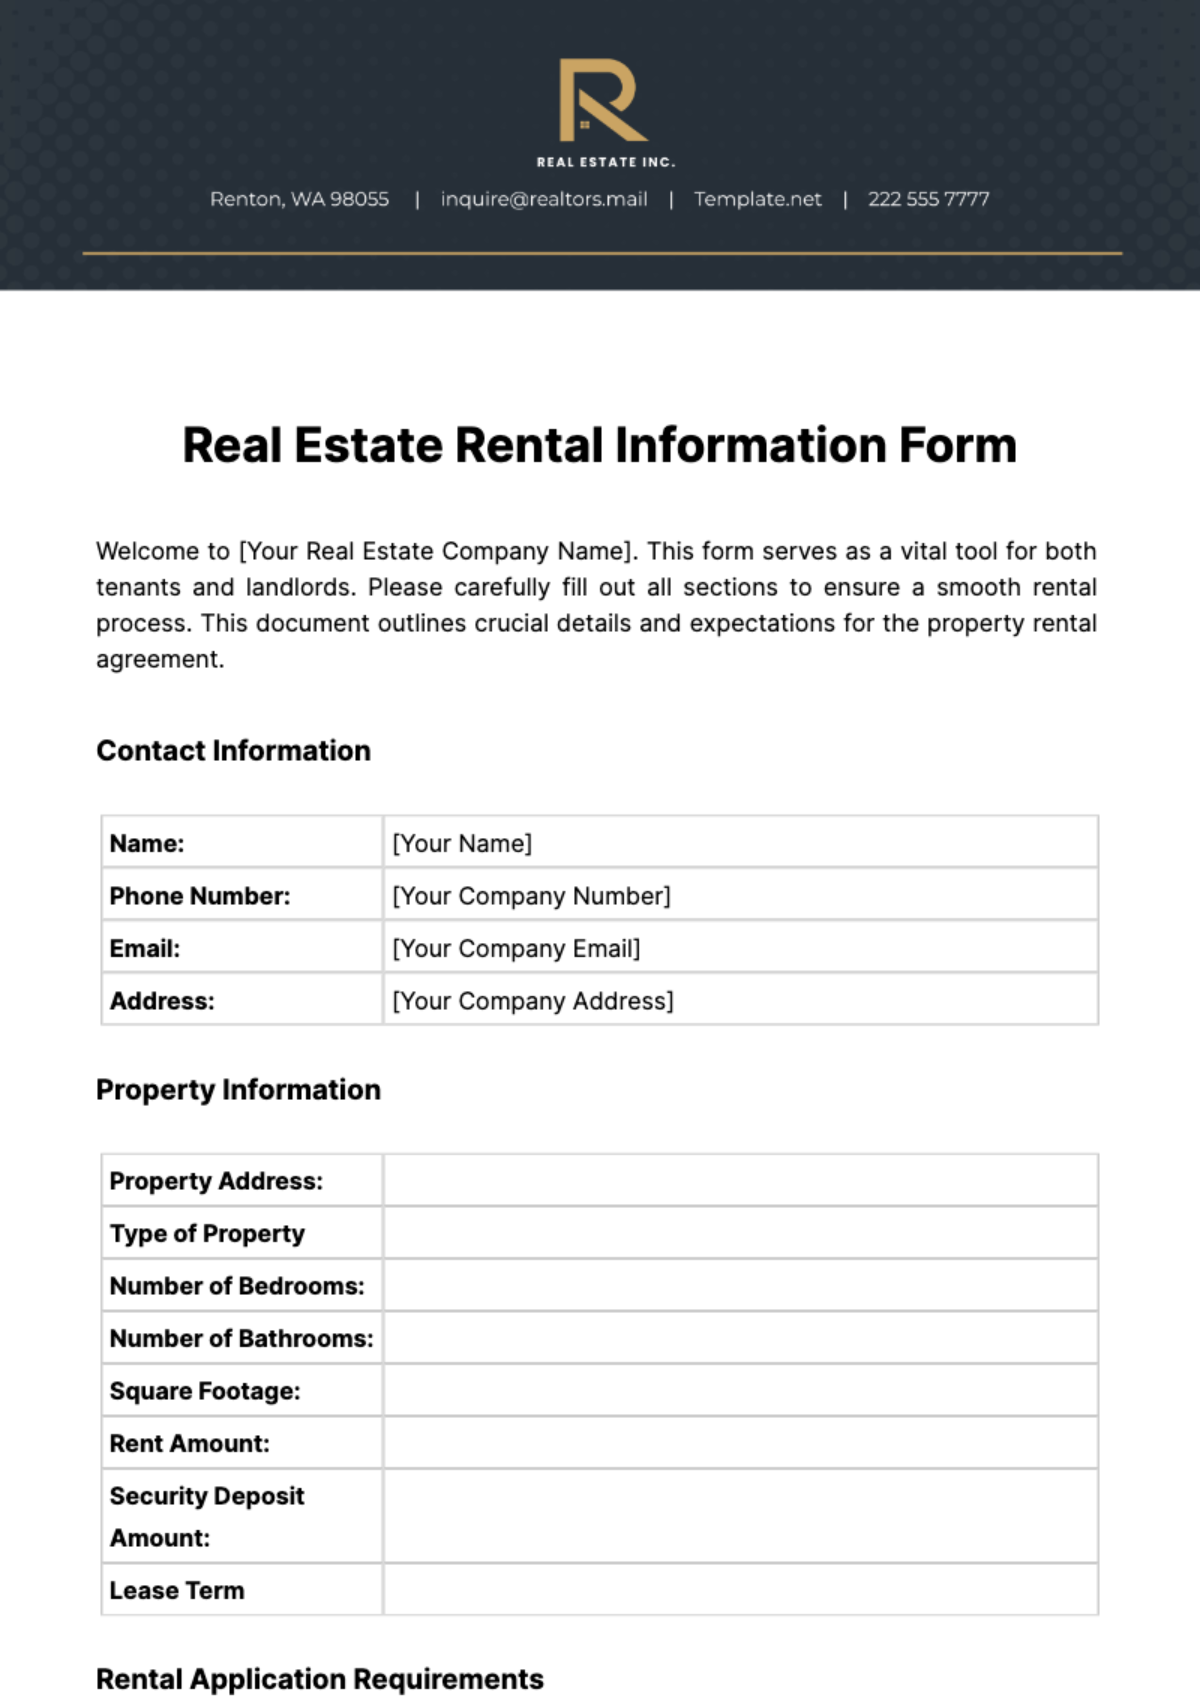 Free Real Estate Rental Information Form Template